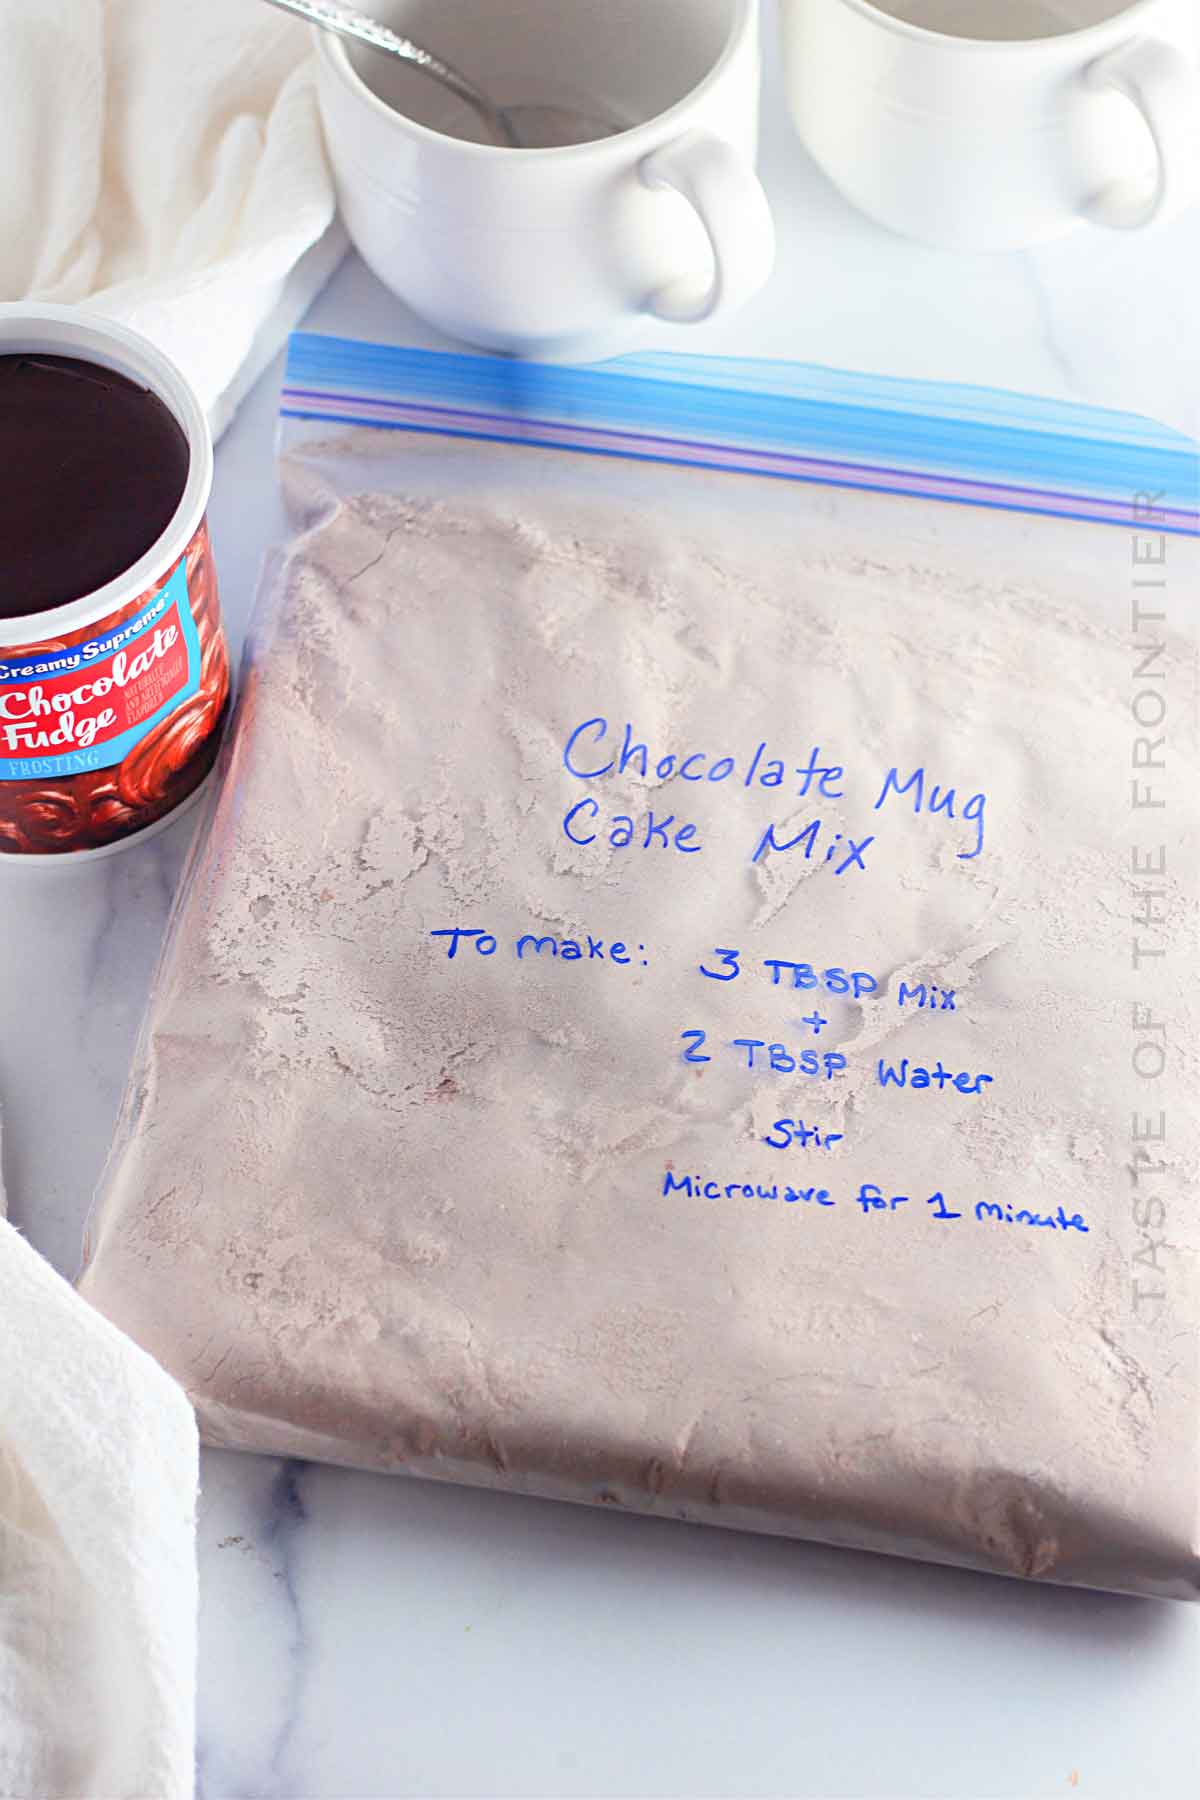 Chocolate Mug Cake Mix - ready to make